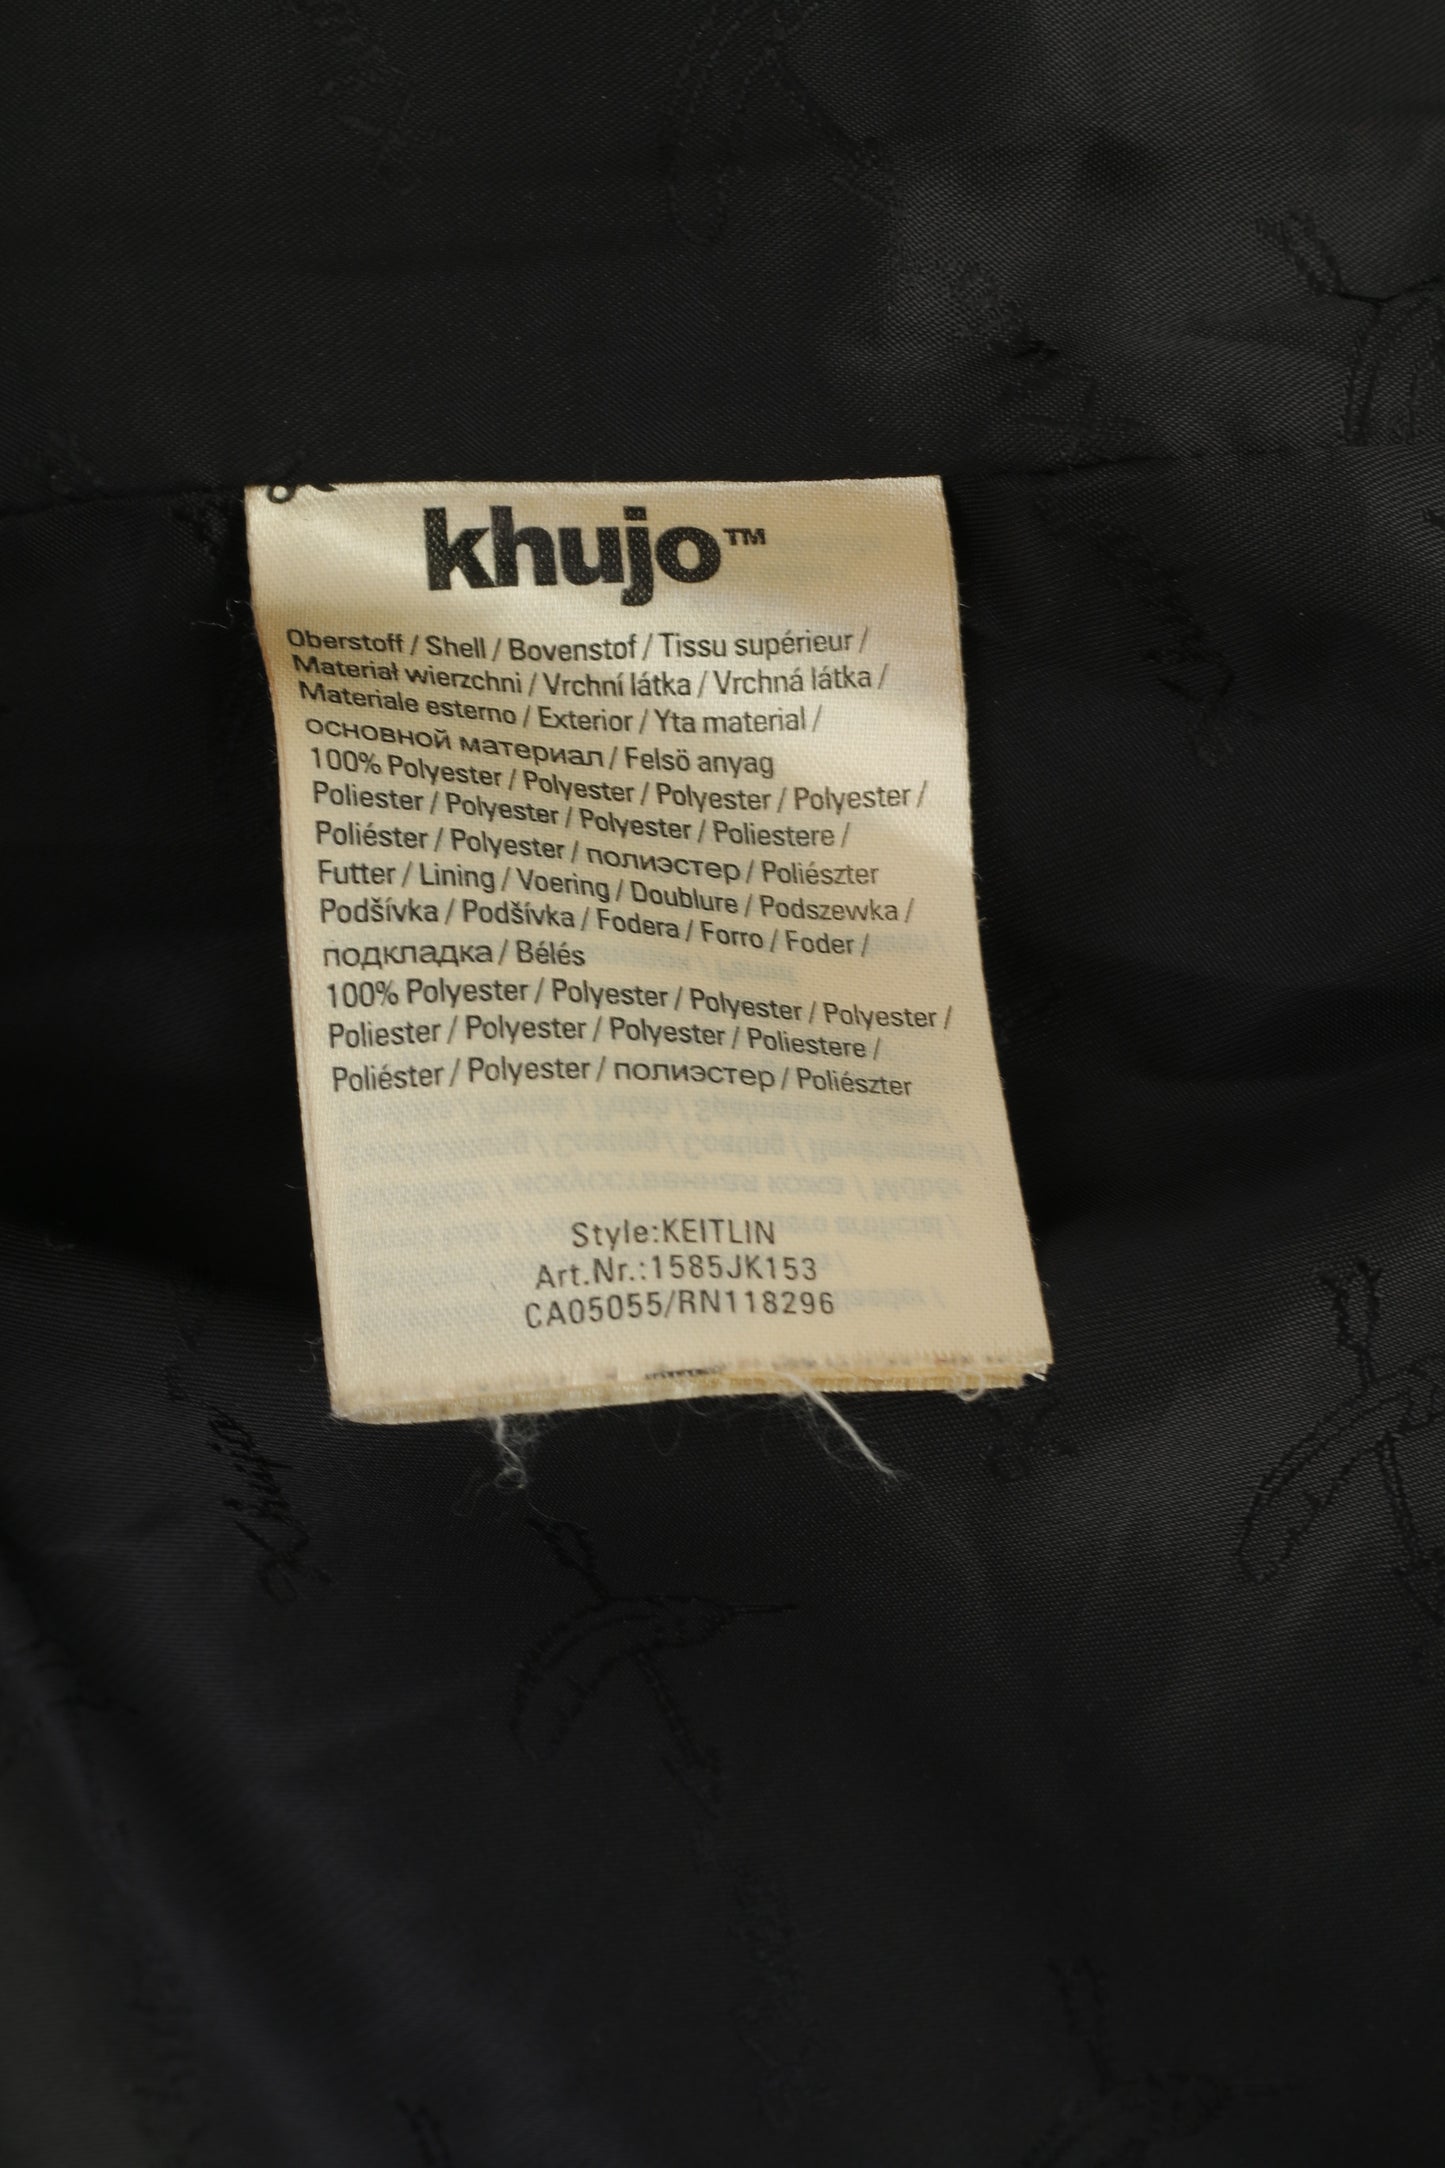 Khujo Women L (M) Coat Gray Striped Vintage Inspired Keitlin Full Zipper Top